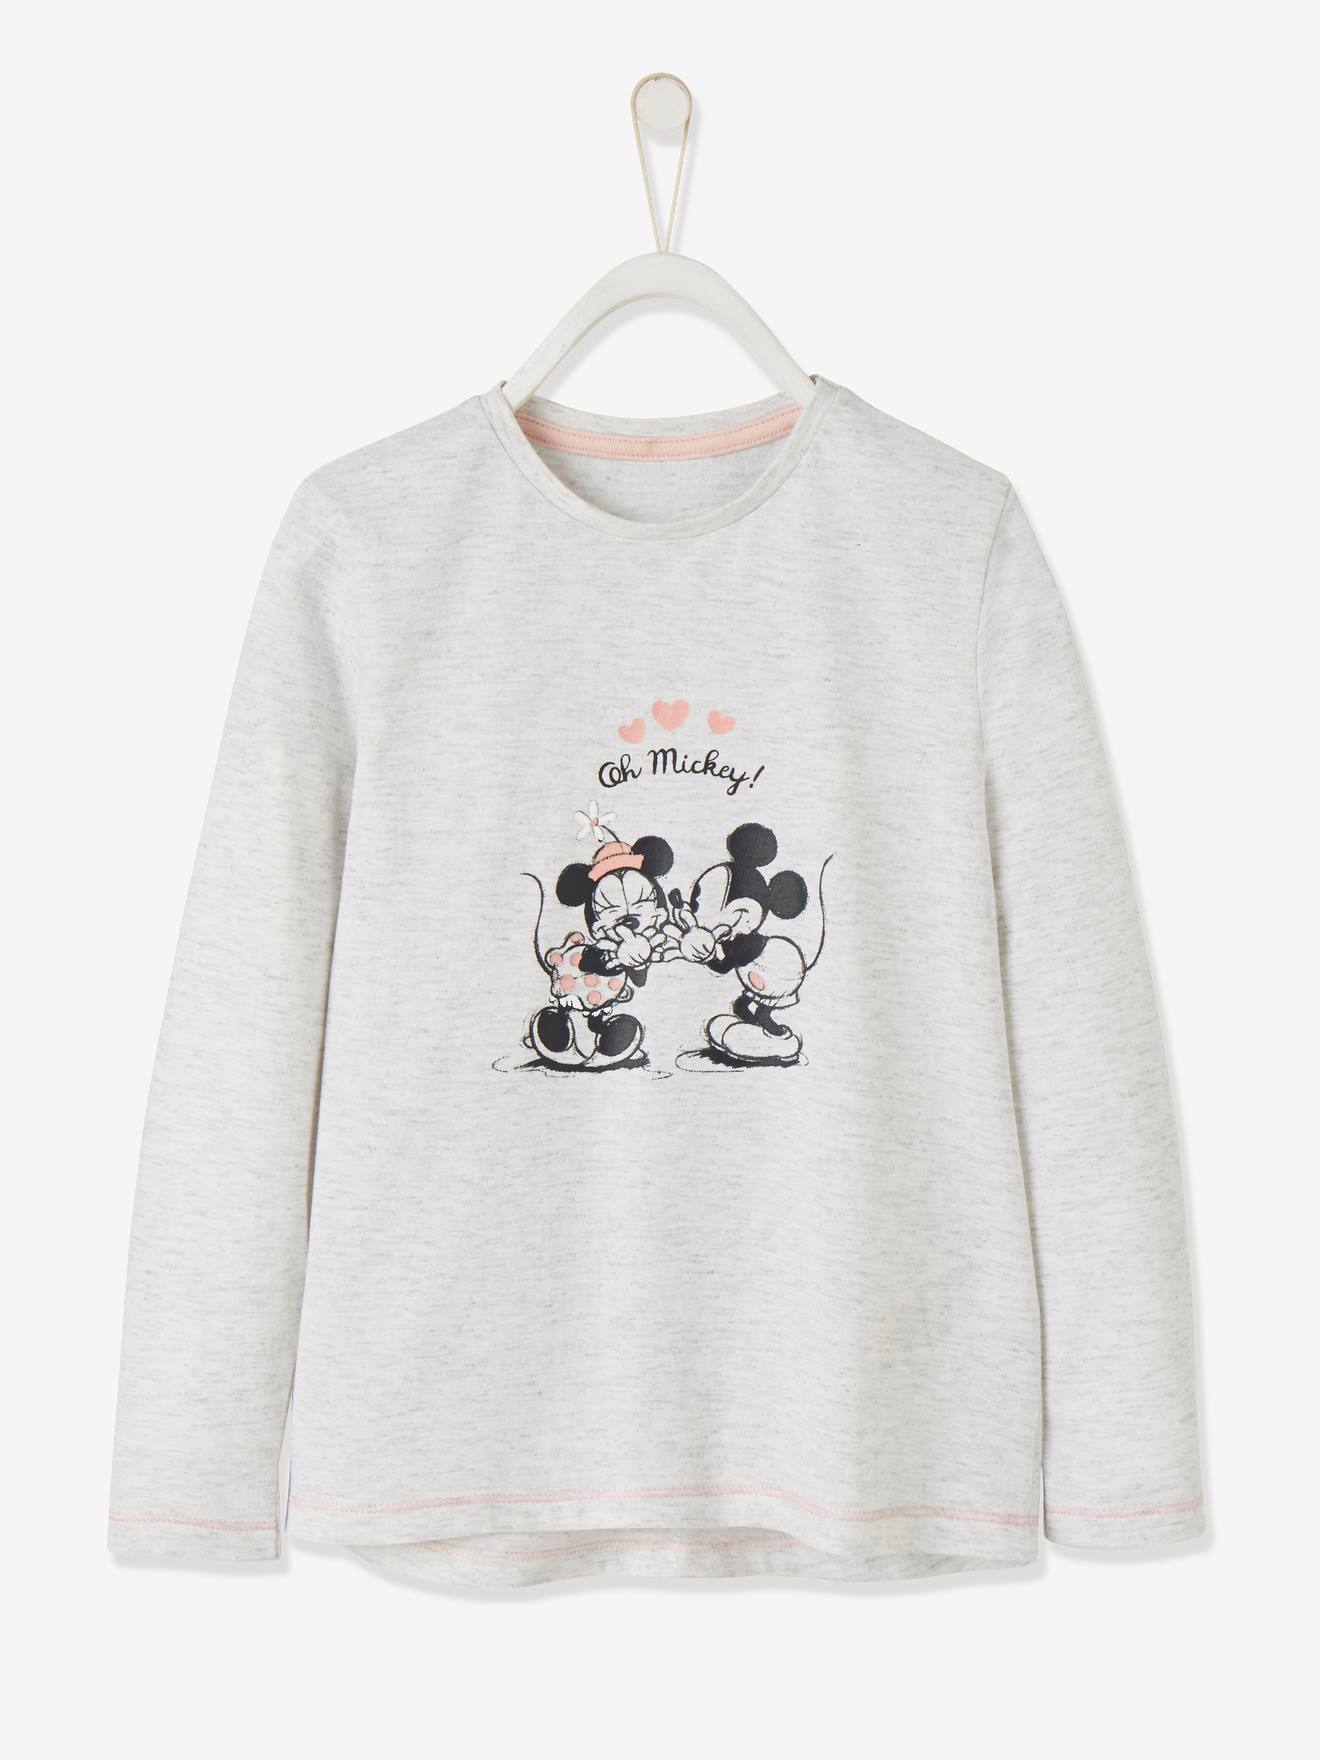 Disney Minnie Girls T-Shirt